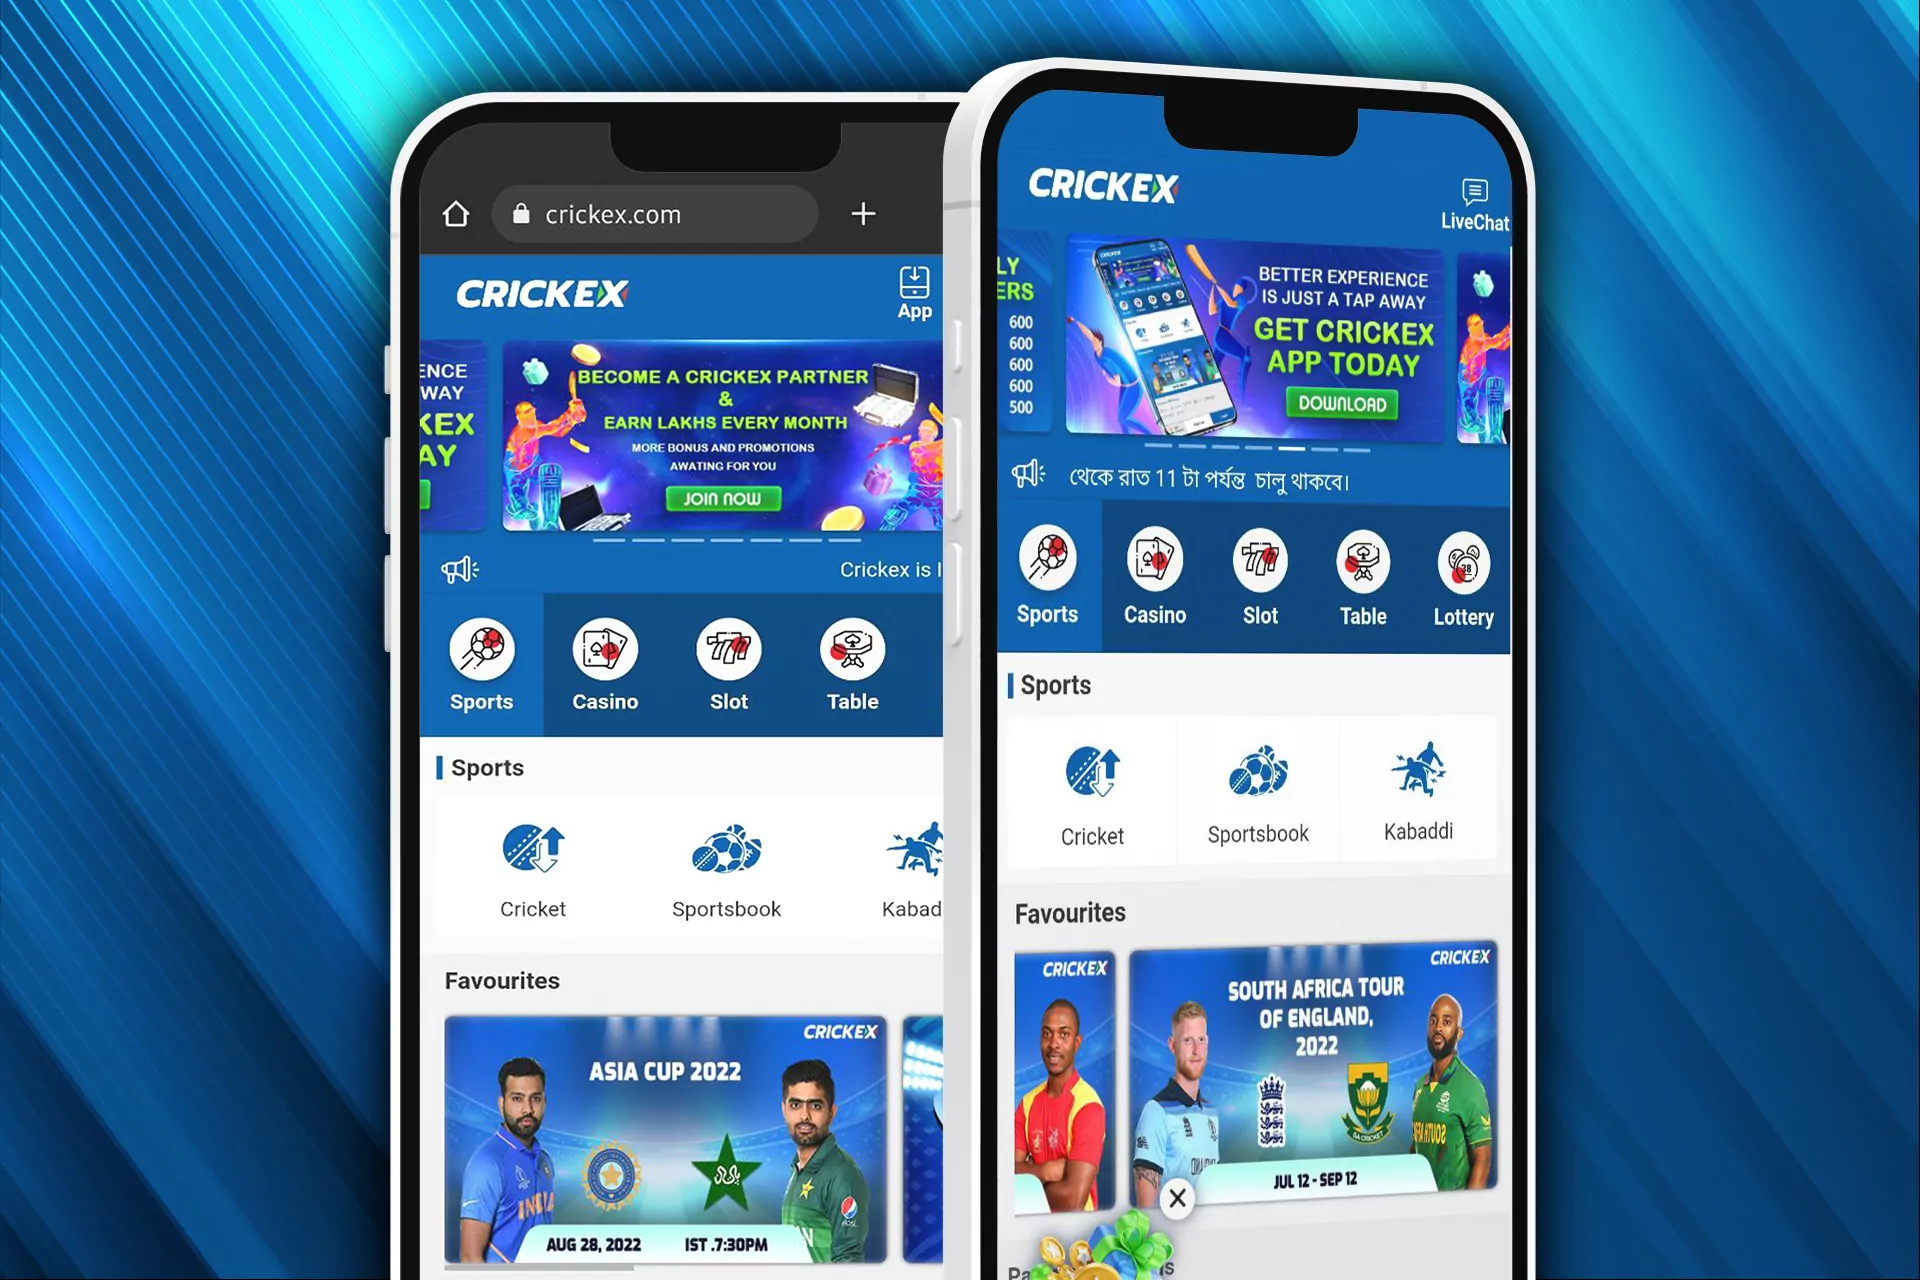 You can get access to Crickex via the desktop or mobile app, or via the browser.